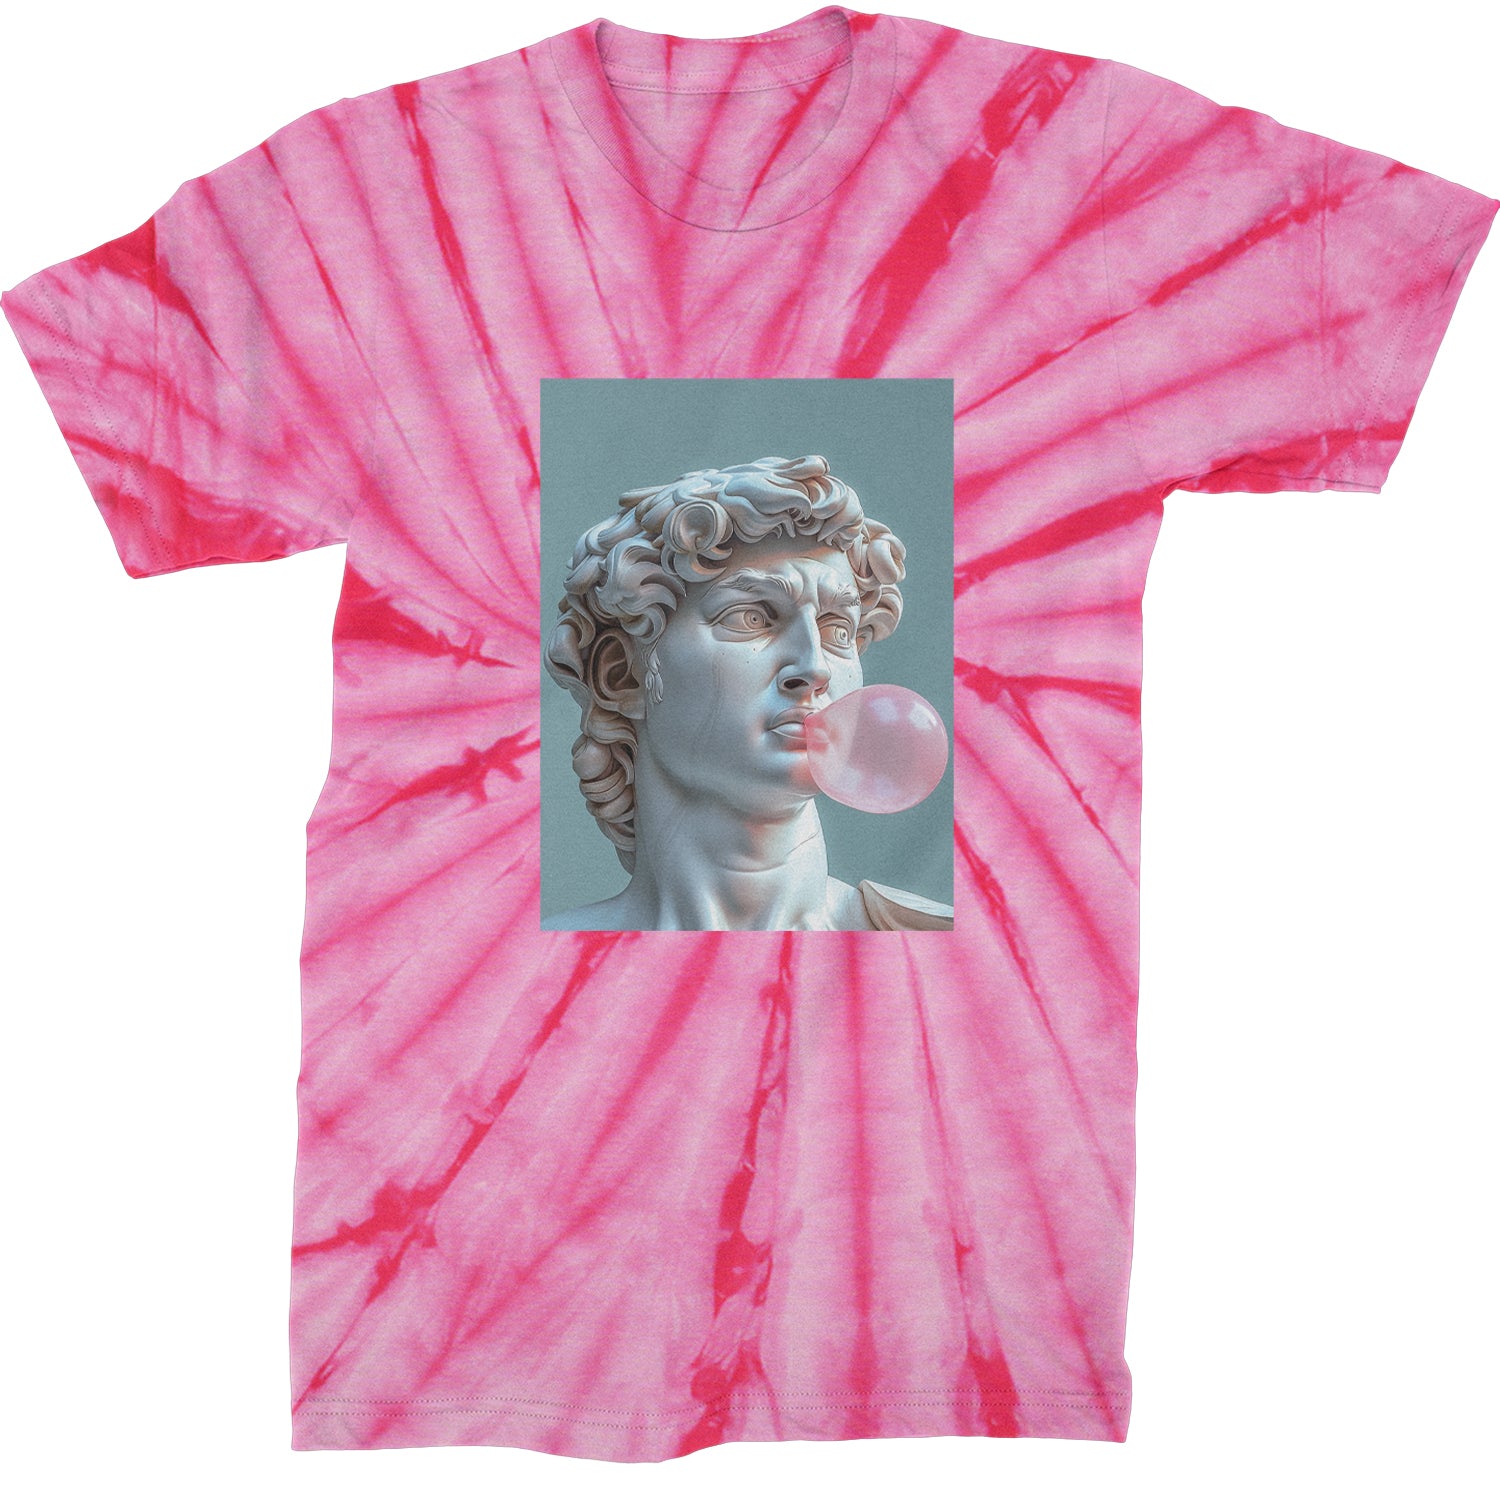 Michelangelo's David with Bubble Gum Contemporary Statue Art Mens T-shirt Tie-Dye Spider Pink